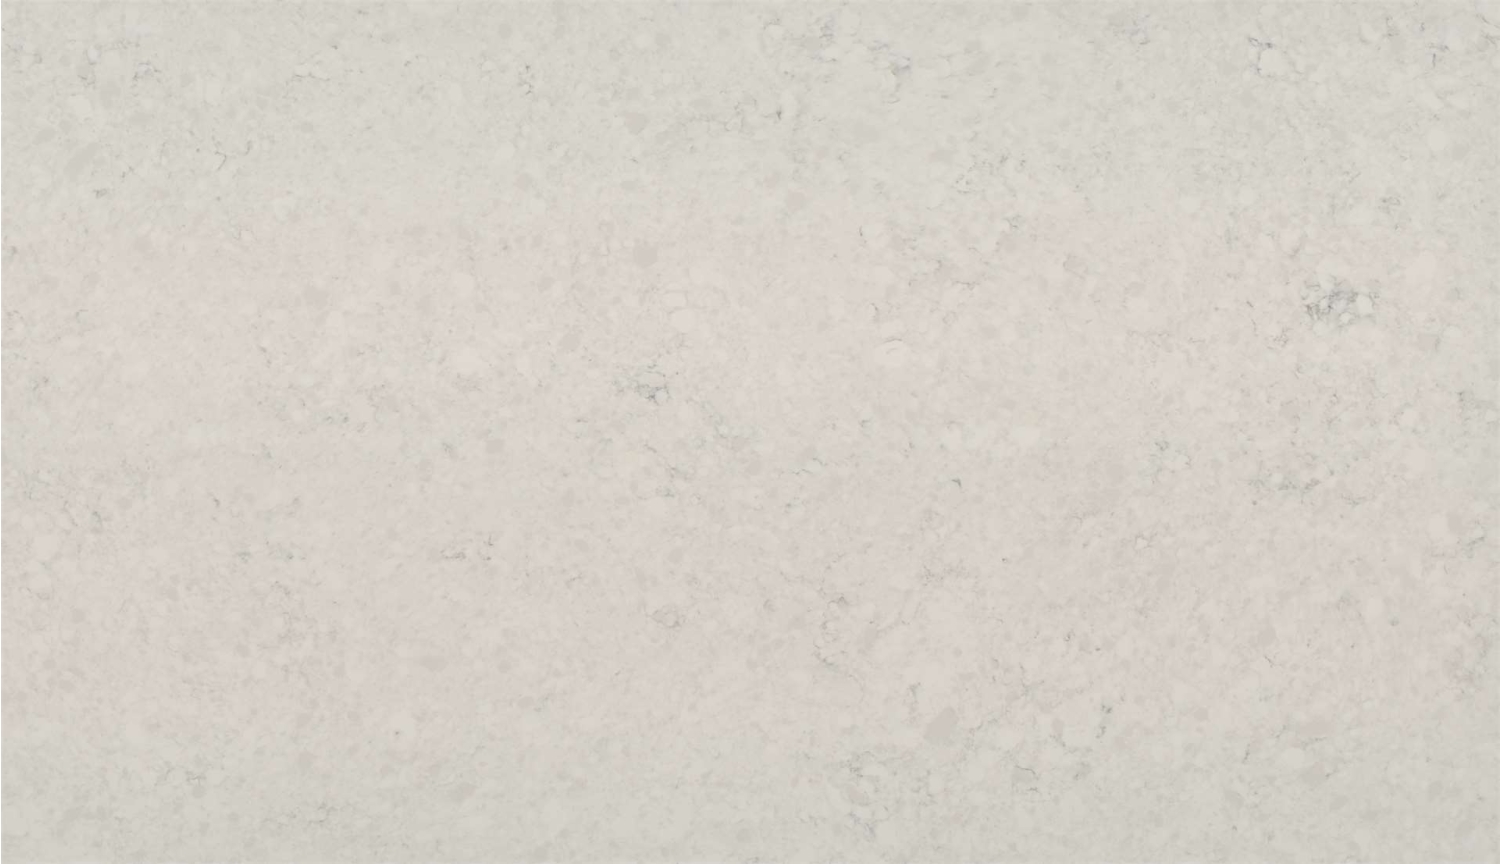 AQ171103-2 Vietnam Frosty Carrina Quartz Stone Closet Tops